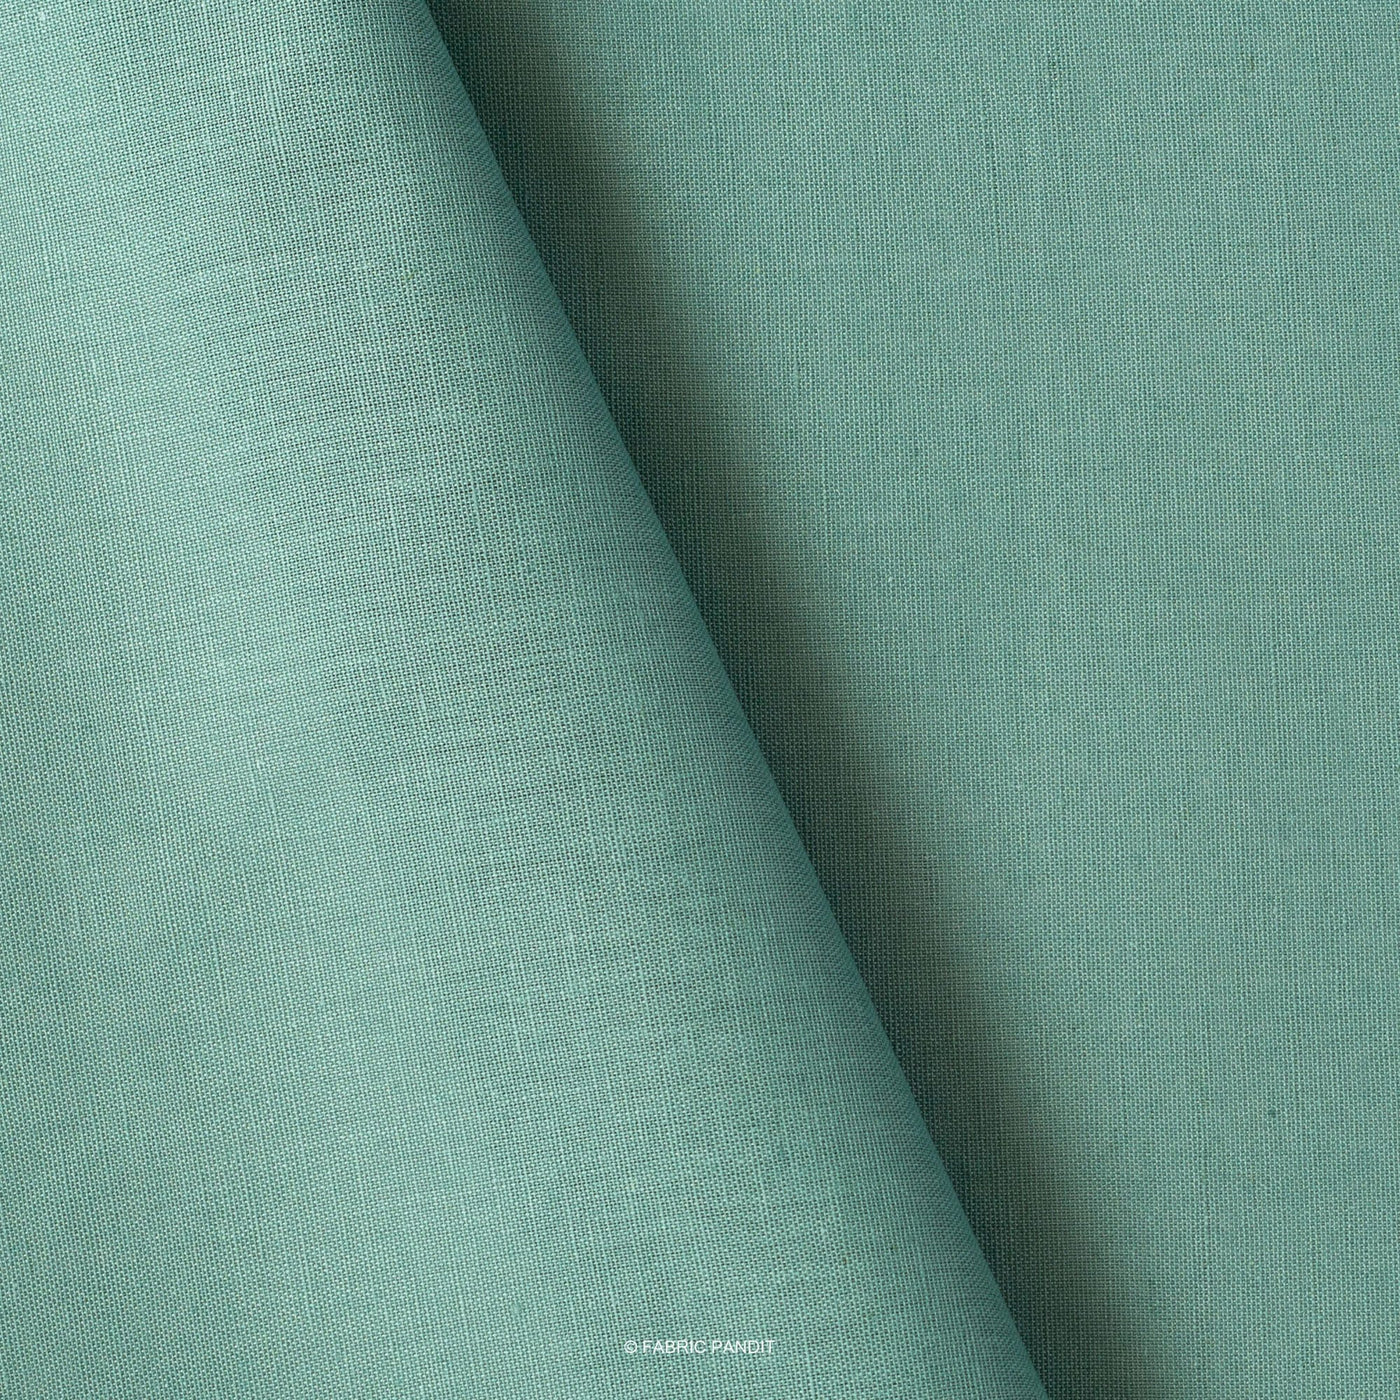 Fabric Pandit Fabric Aquamarine (Light) Color Pure Cotton Linen Fabric